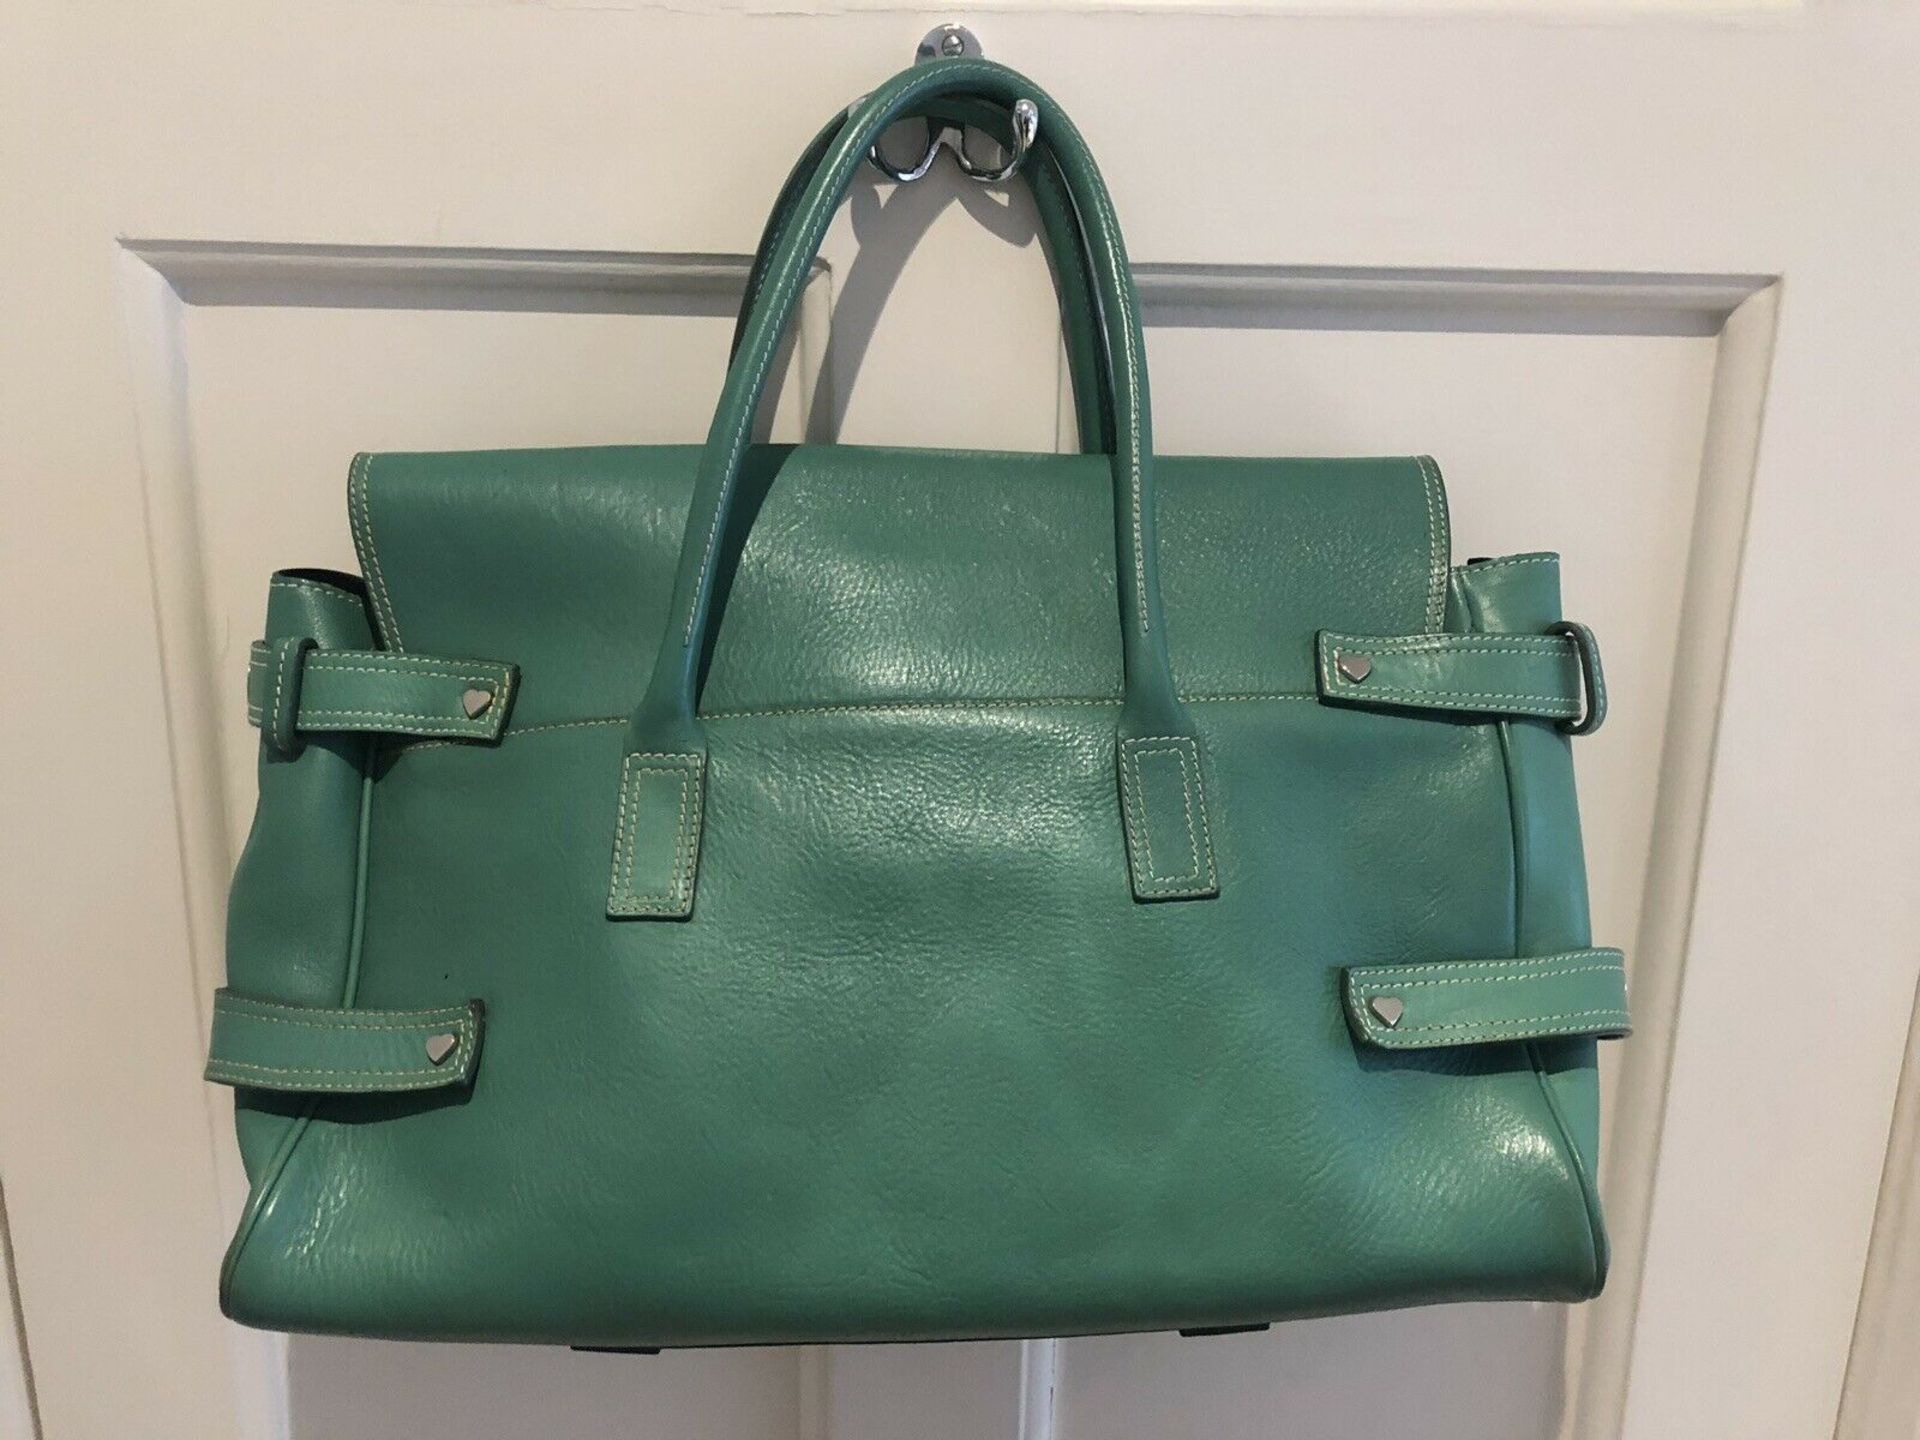 Luella Bartley Vintage 'Giselle' Green Leather Bag - Image 2 of 14